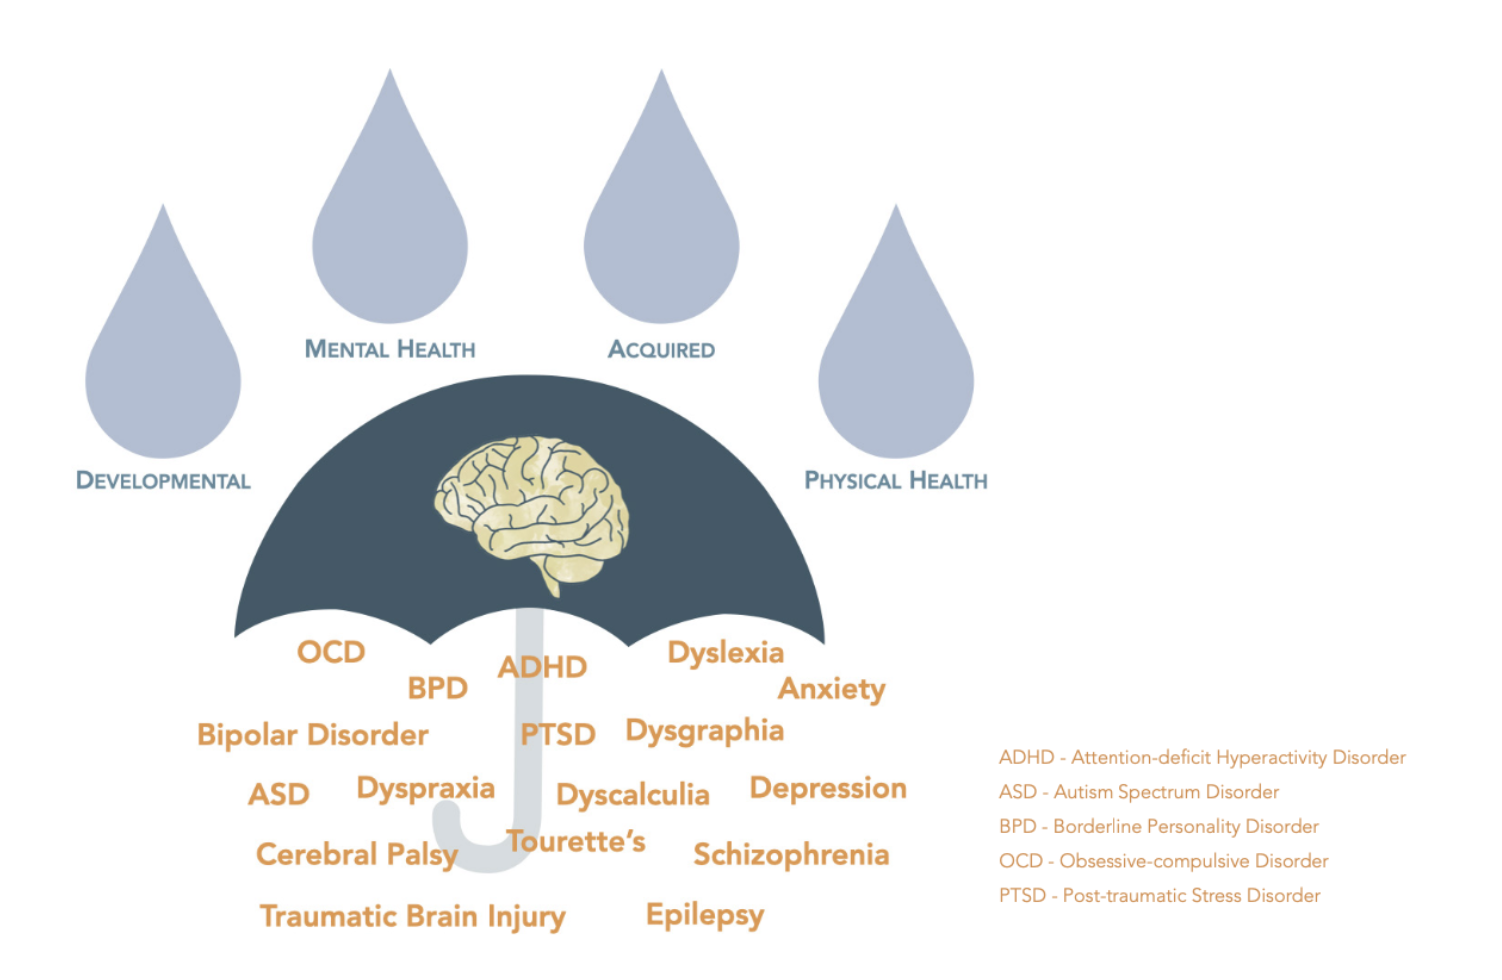 A diagram of a brain on an umbrella in the rain, with the following words underneath it: OCD, BPD, ADHD, Dyslexia, Anxiety, PTSD, Dysgraphia, Bipolar Disorder, ASD, Dyspraxia, Dyscalculia, Depression, Cerebral Palsy, Tourette's, Schizophrenia, Epilepsy, Traumatic Brain Injury.